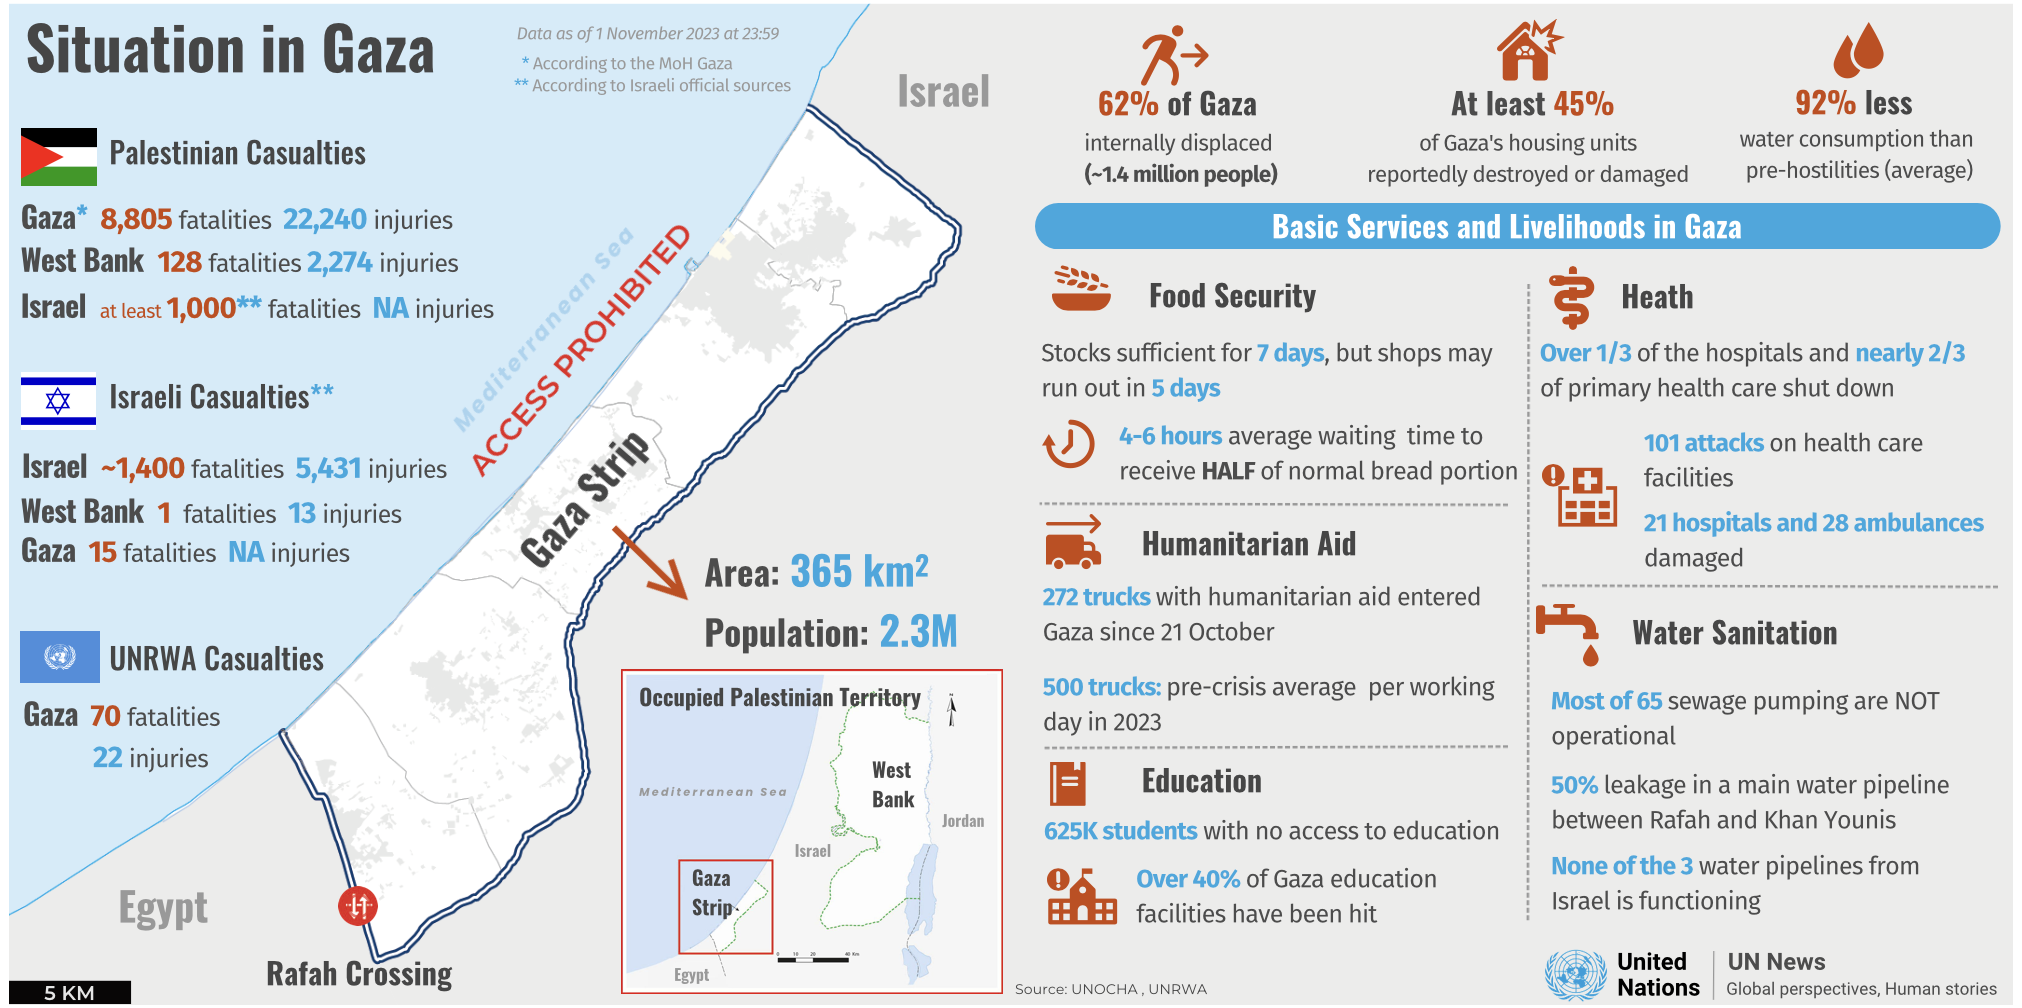 The situation in Gaza according to the U.N., OCHA, UNRWA